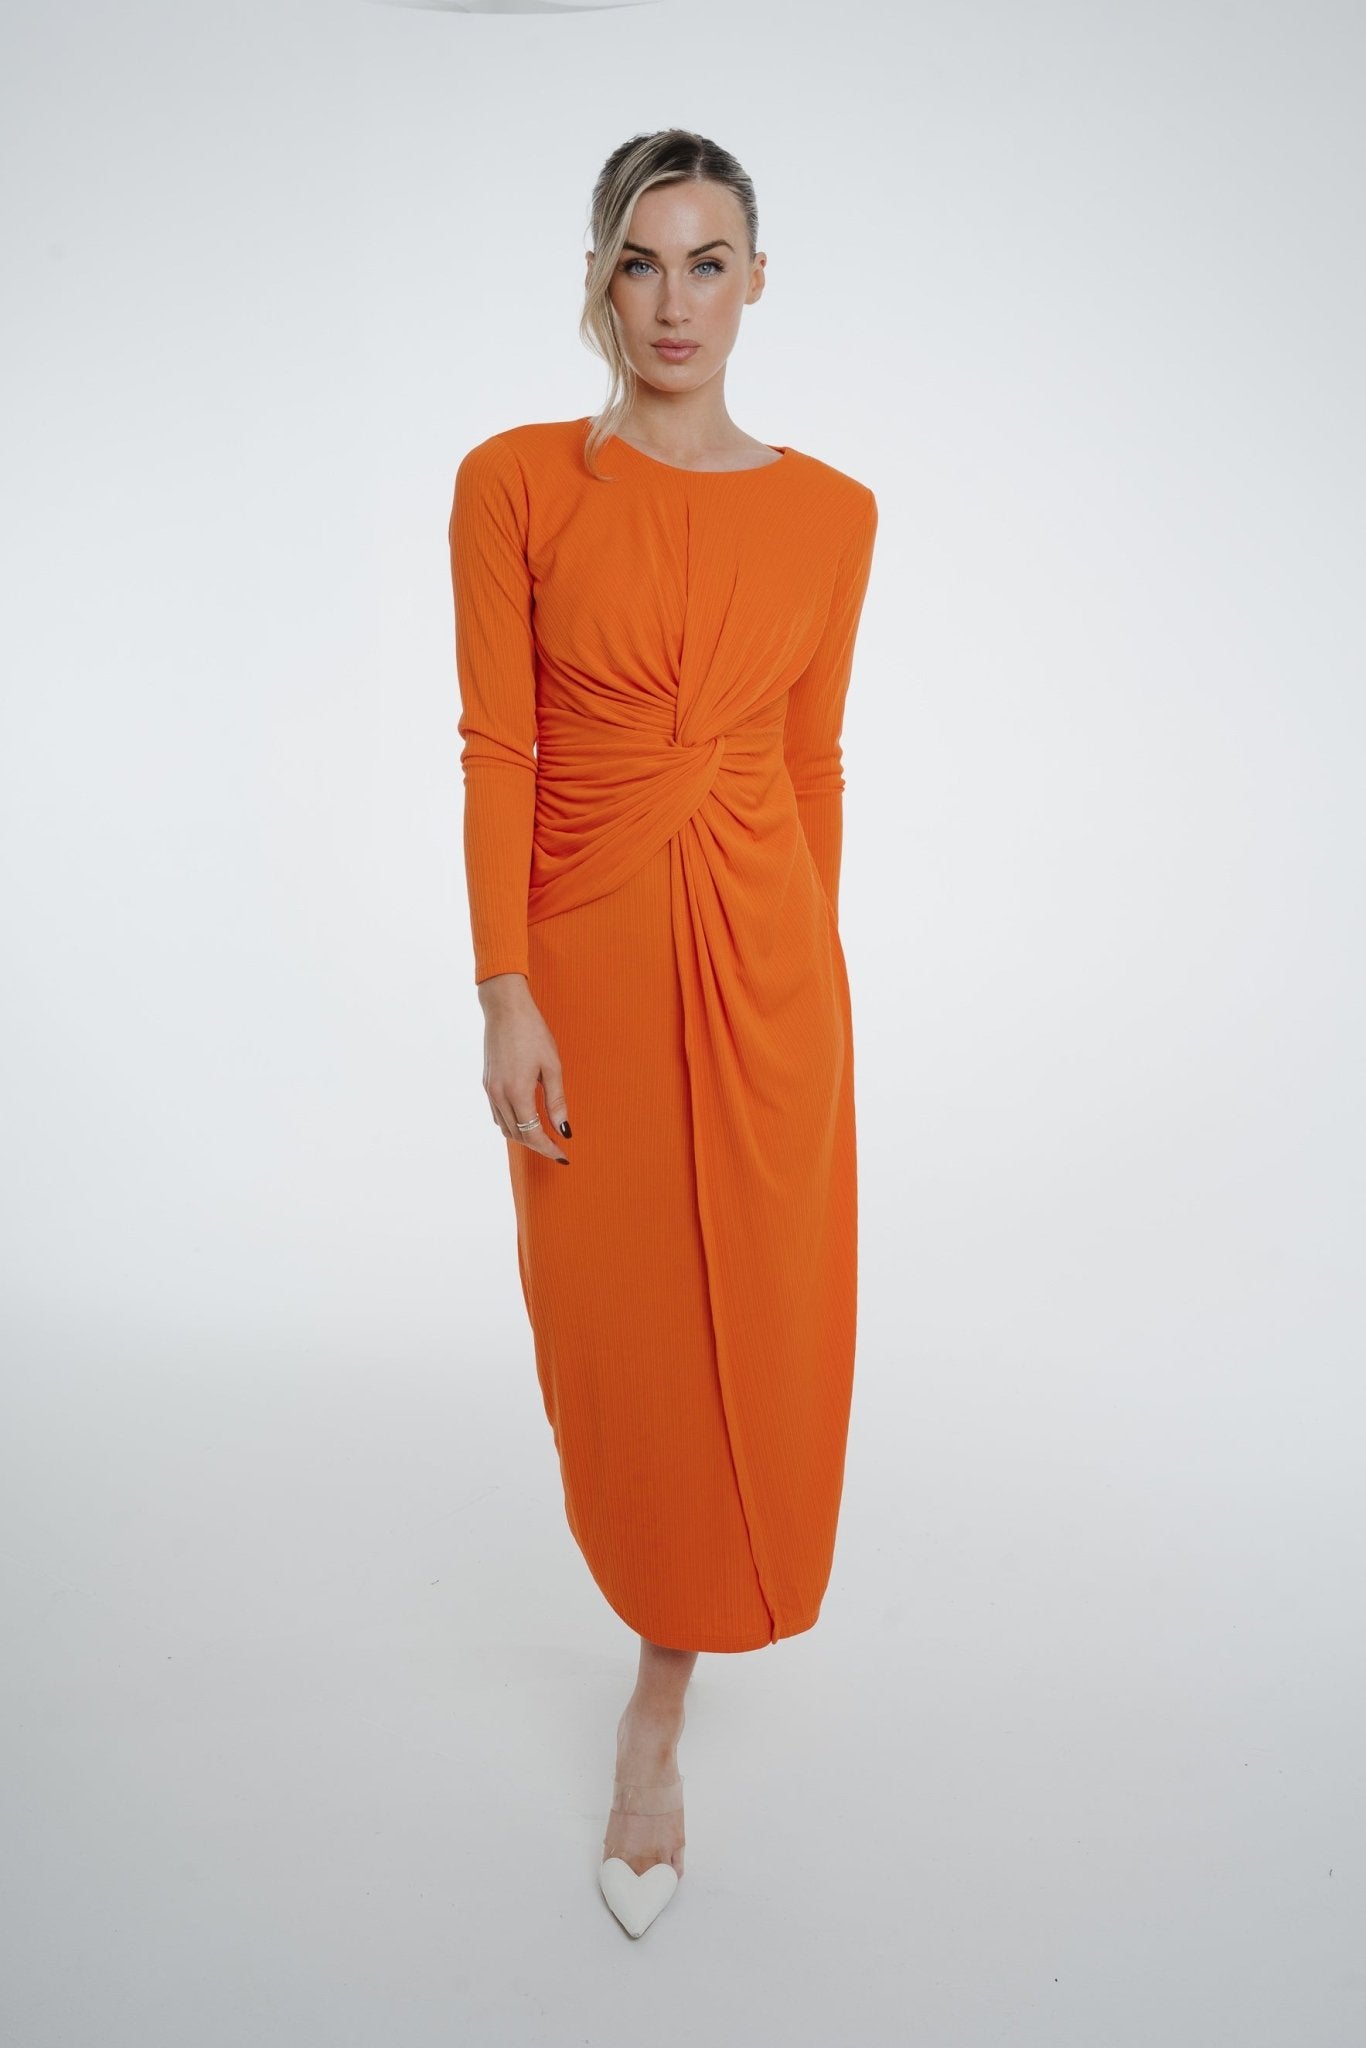 Kelly Knot Front Midi Dress In Orange - The Walk in Wardrobe